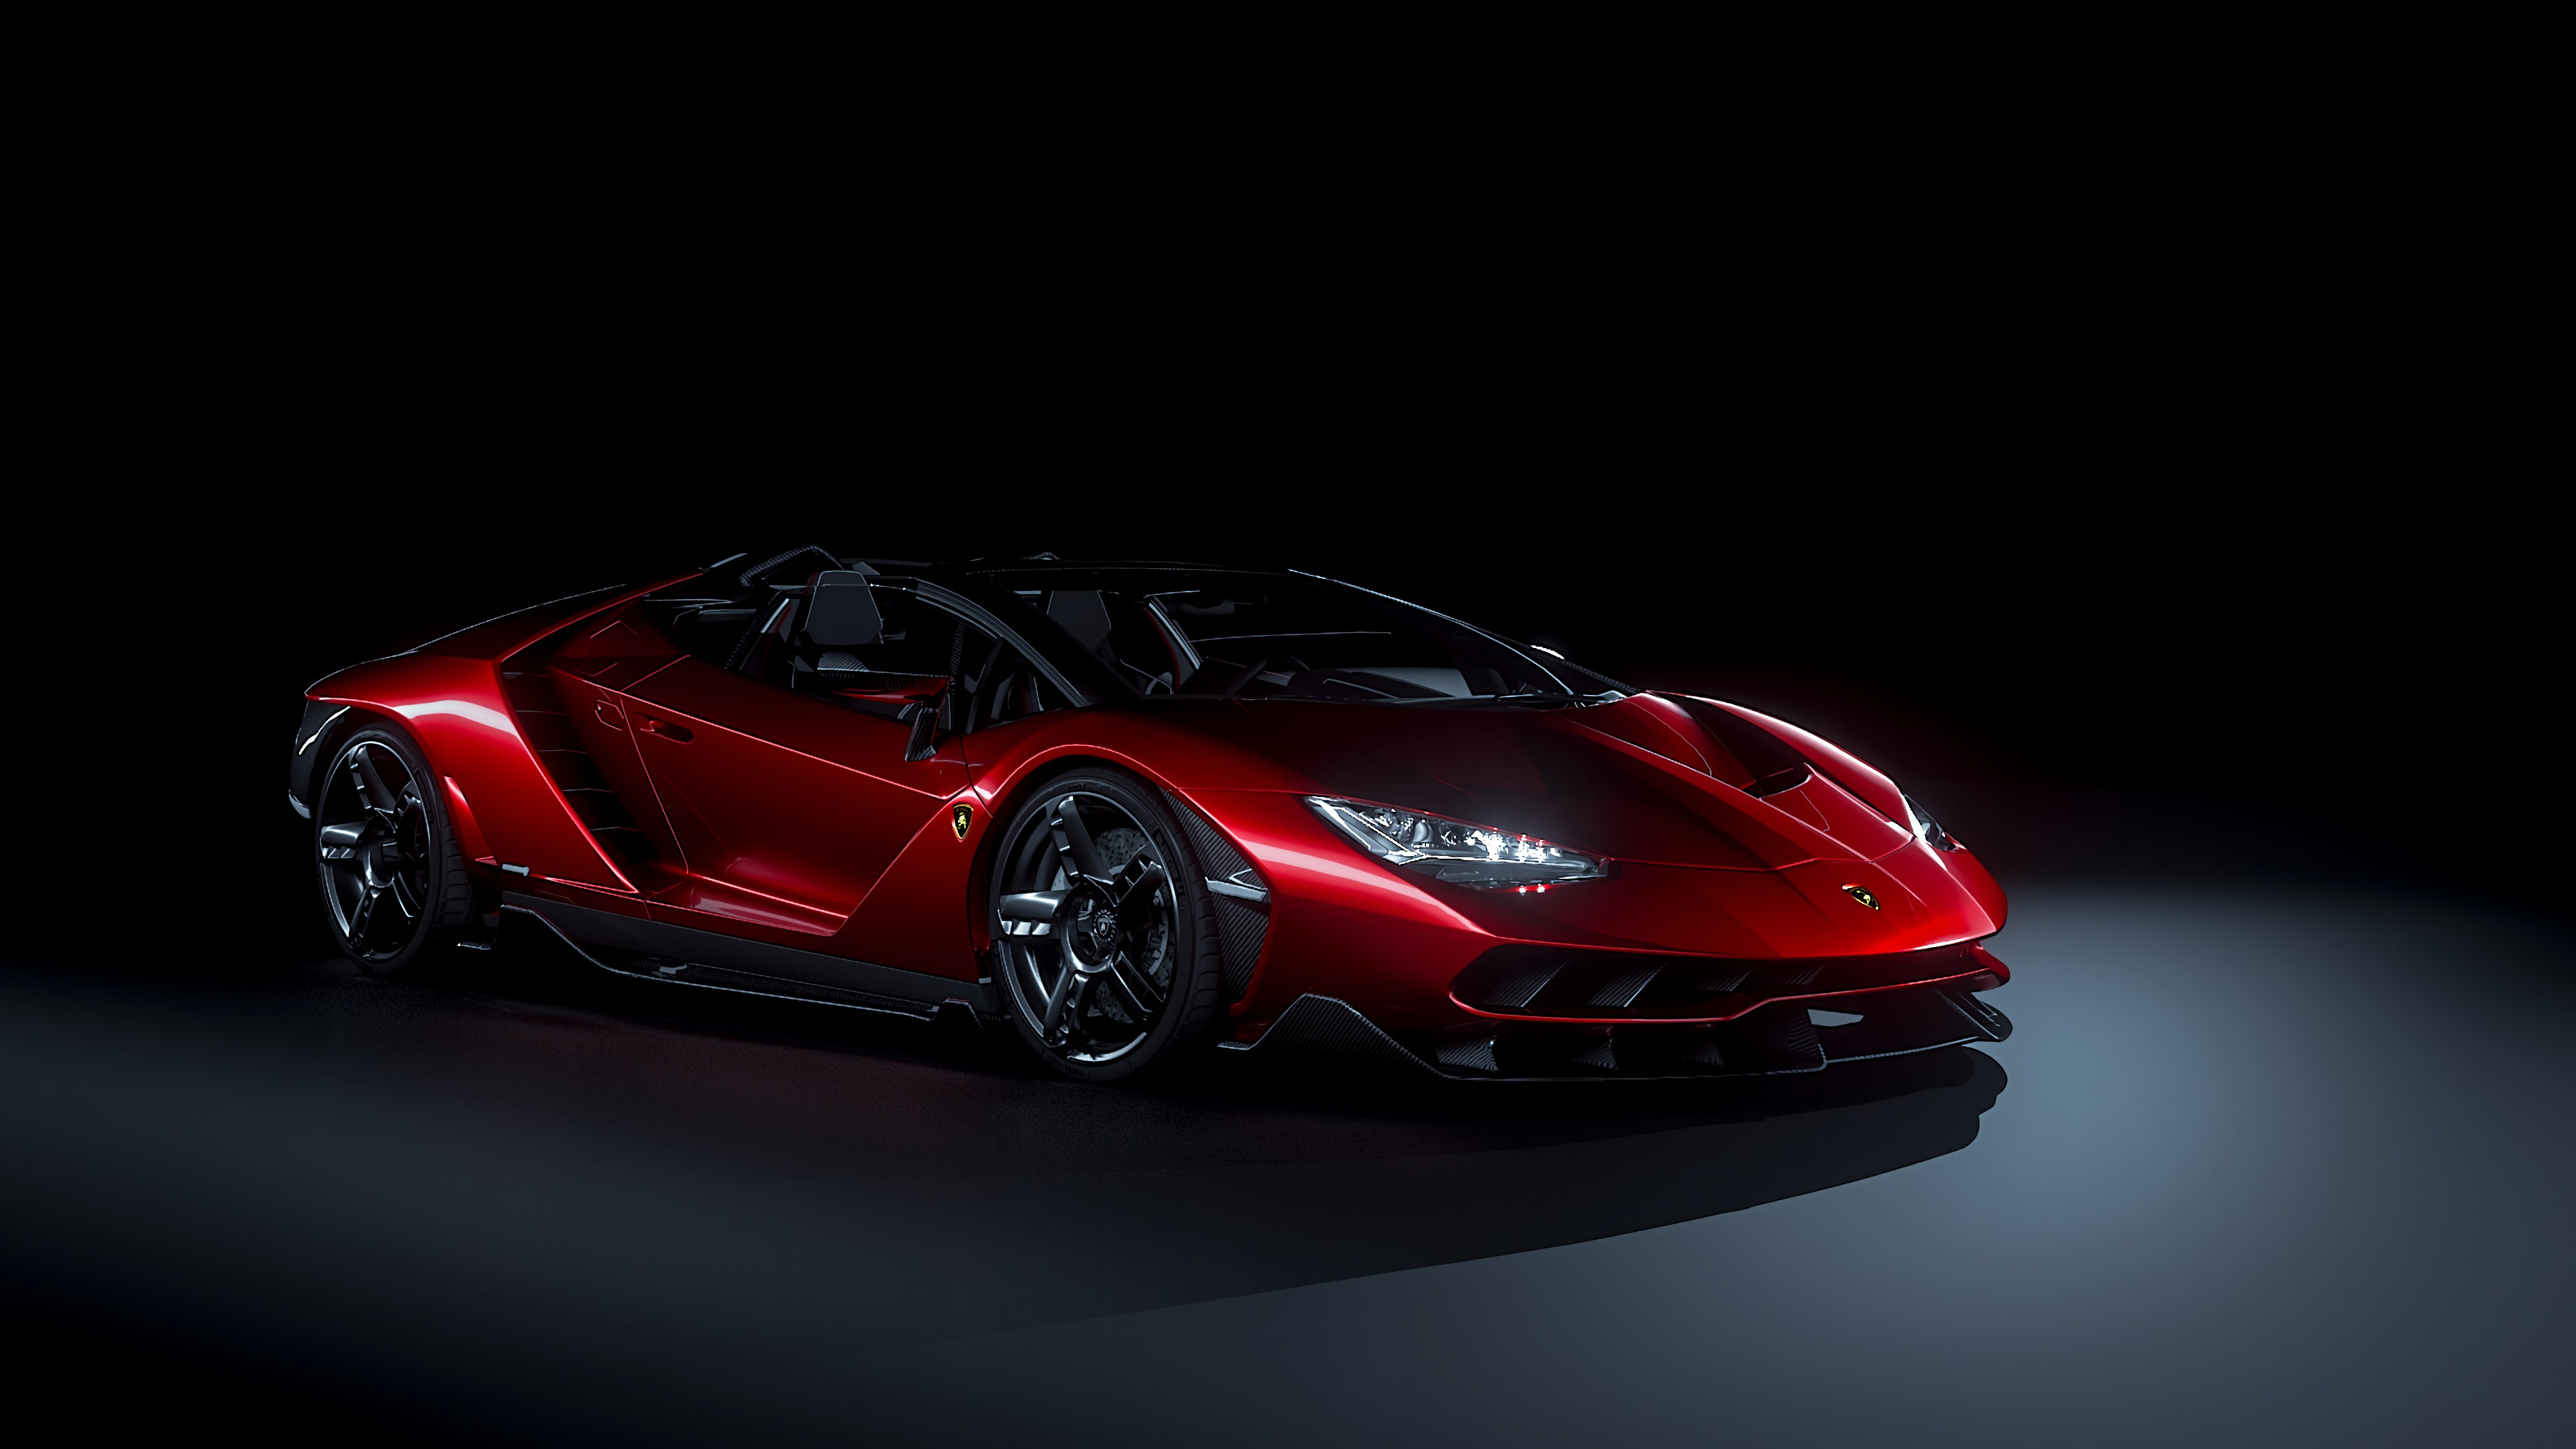 Cherry Lamborghini on a dark background